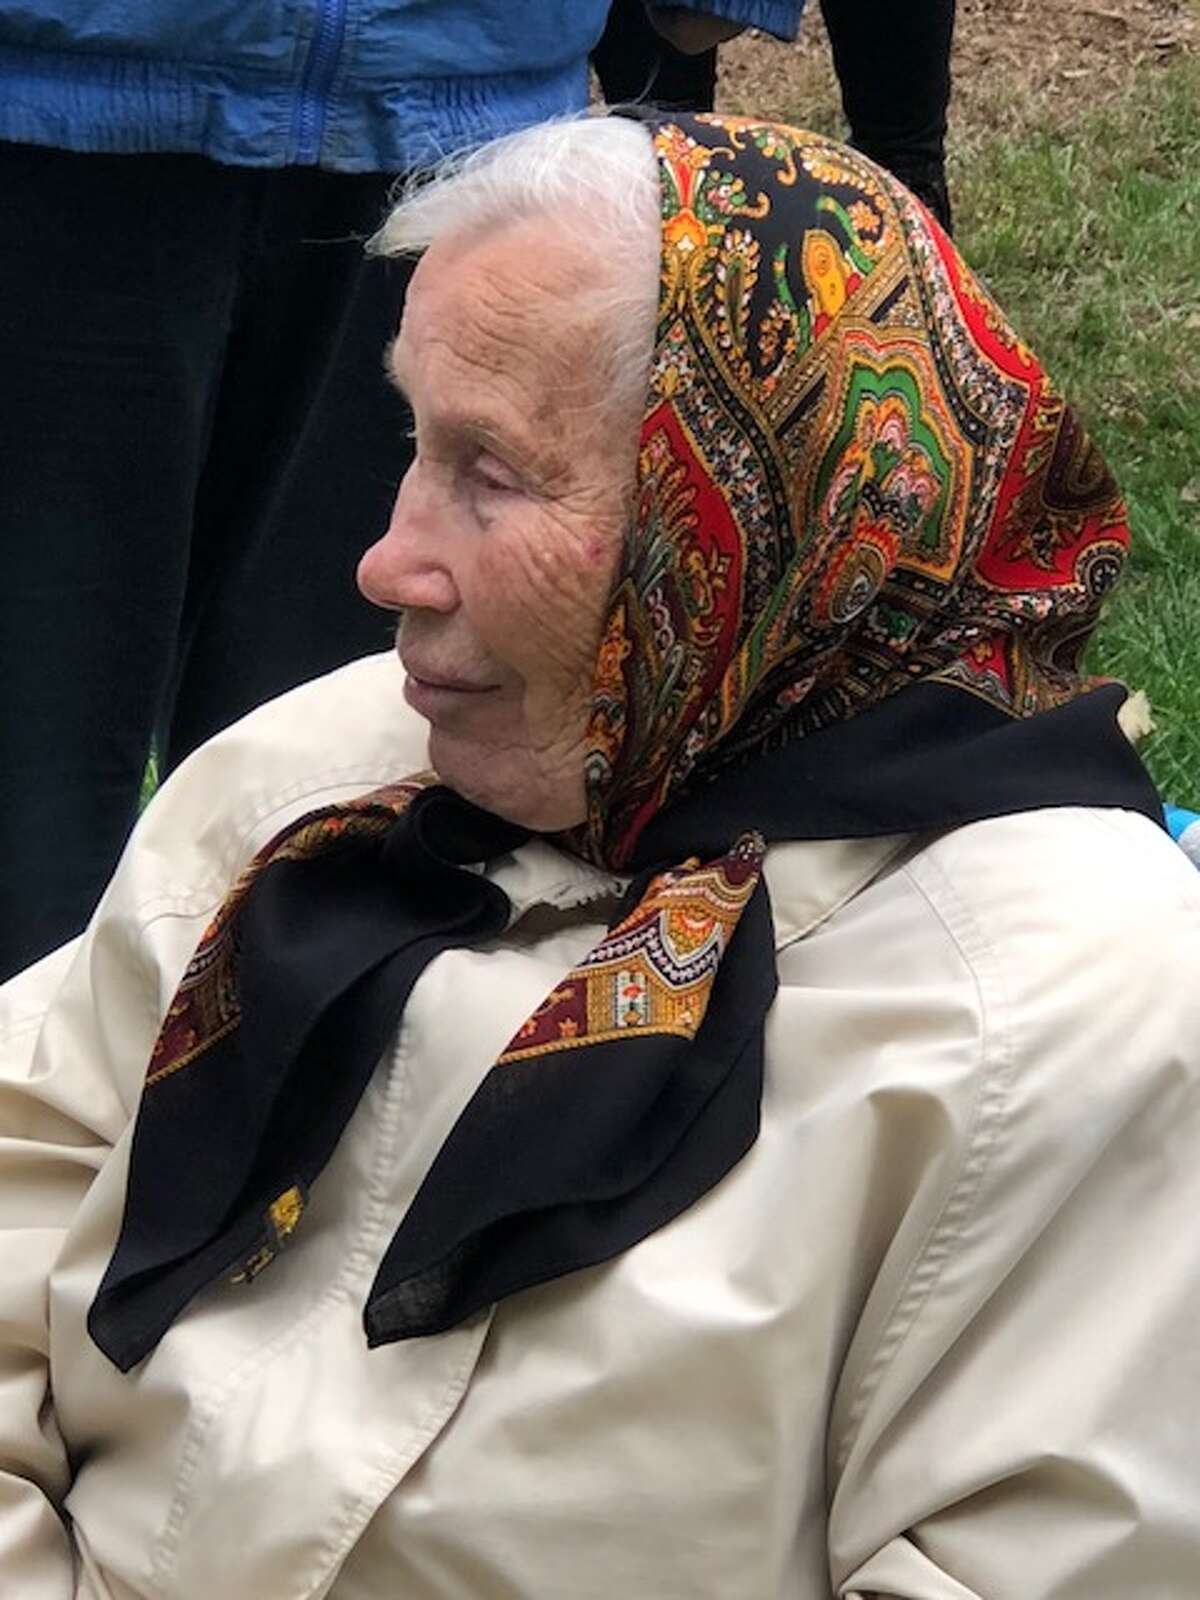 Lukera Kauta, survivor of the Holodomor genocide in Ukraine attended a memorial service in Cohoes Nov. 5, 2017. (Andrij Baran)